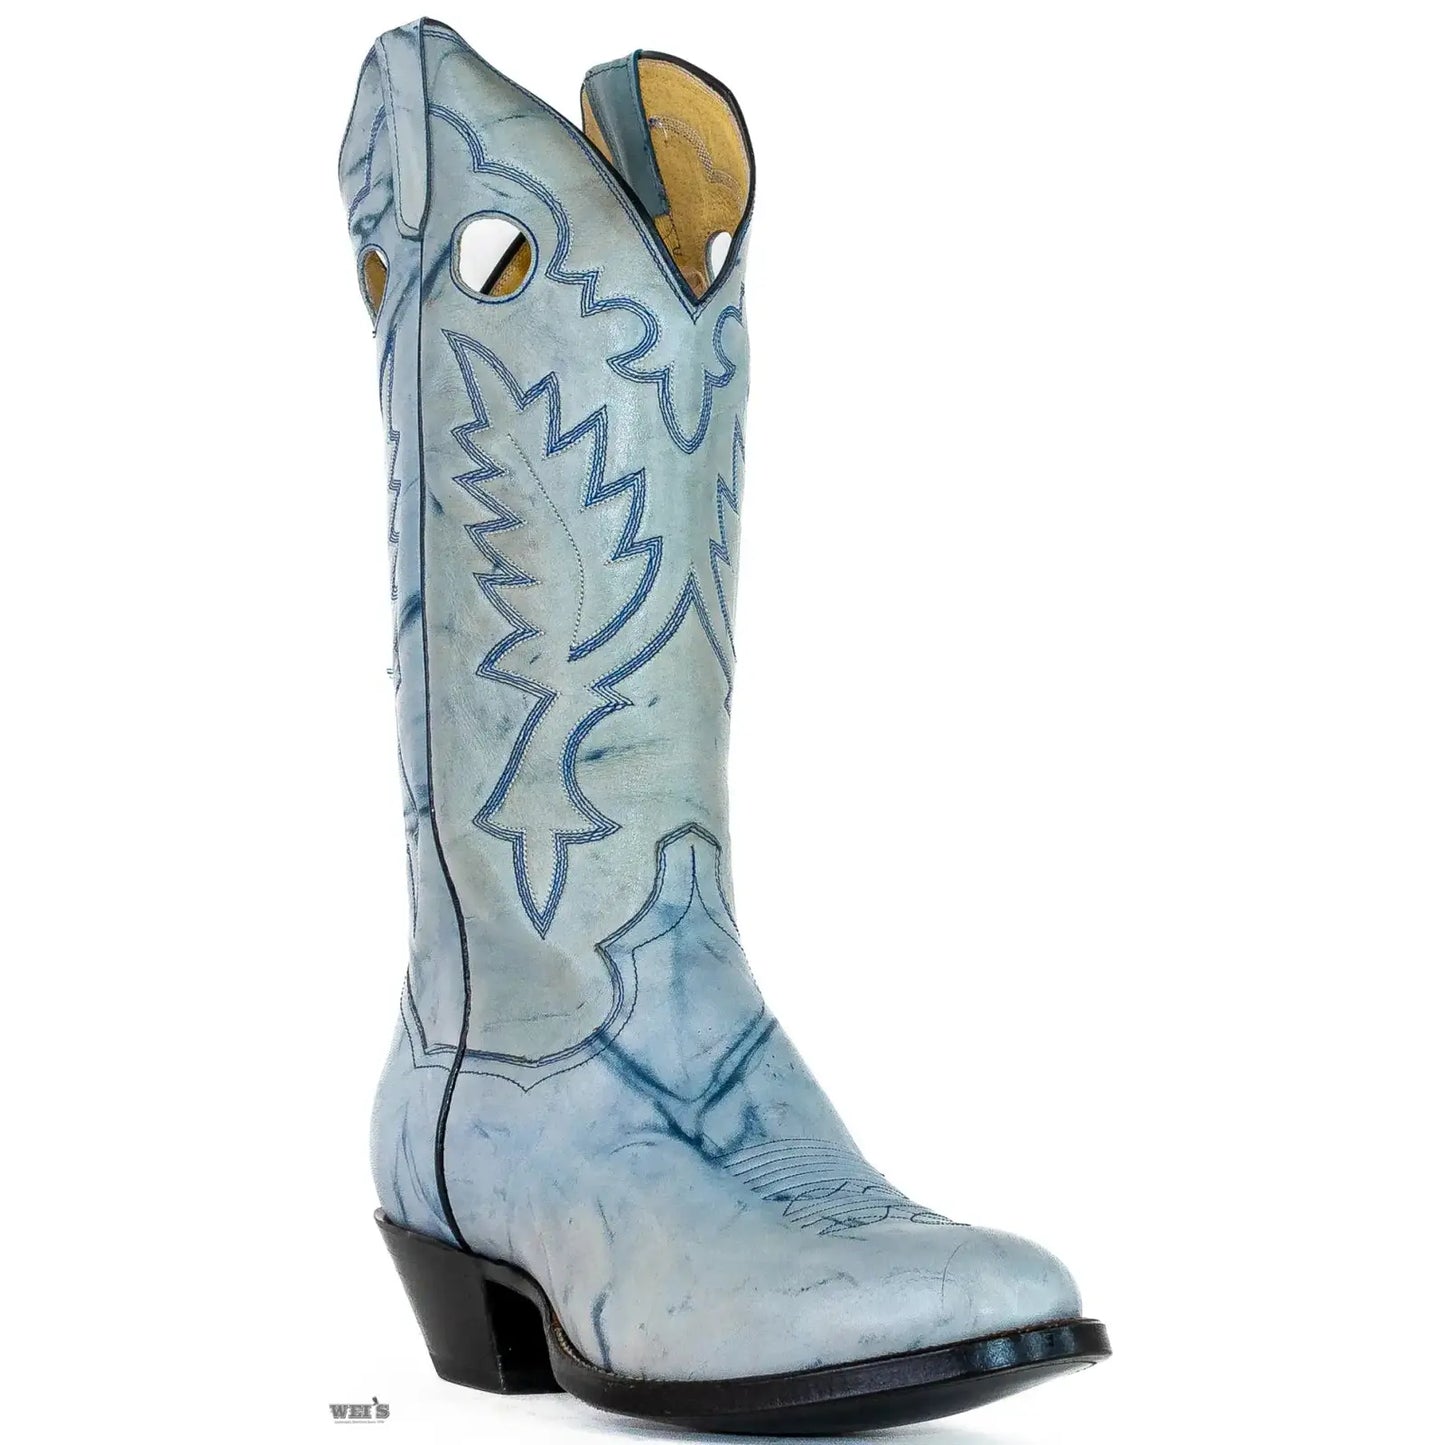 Panhandle Slim Men's Cowboy Boots 14" Yip Cowboy Heel R Toe Denim 32154